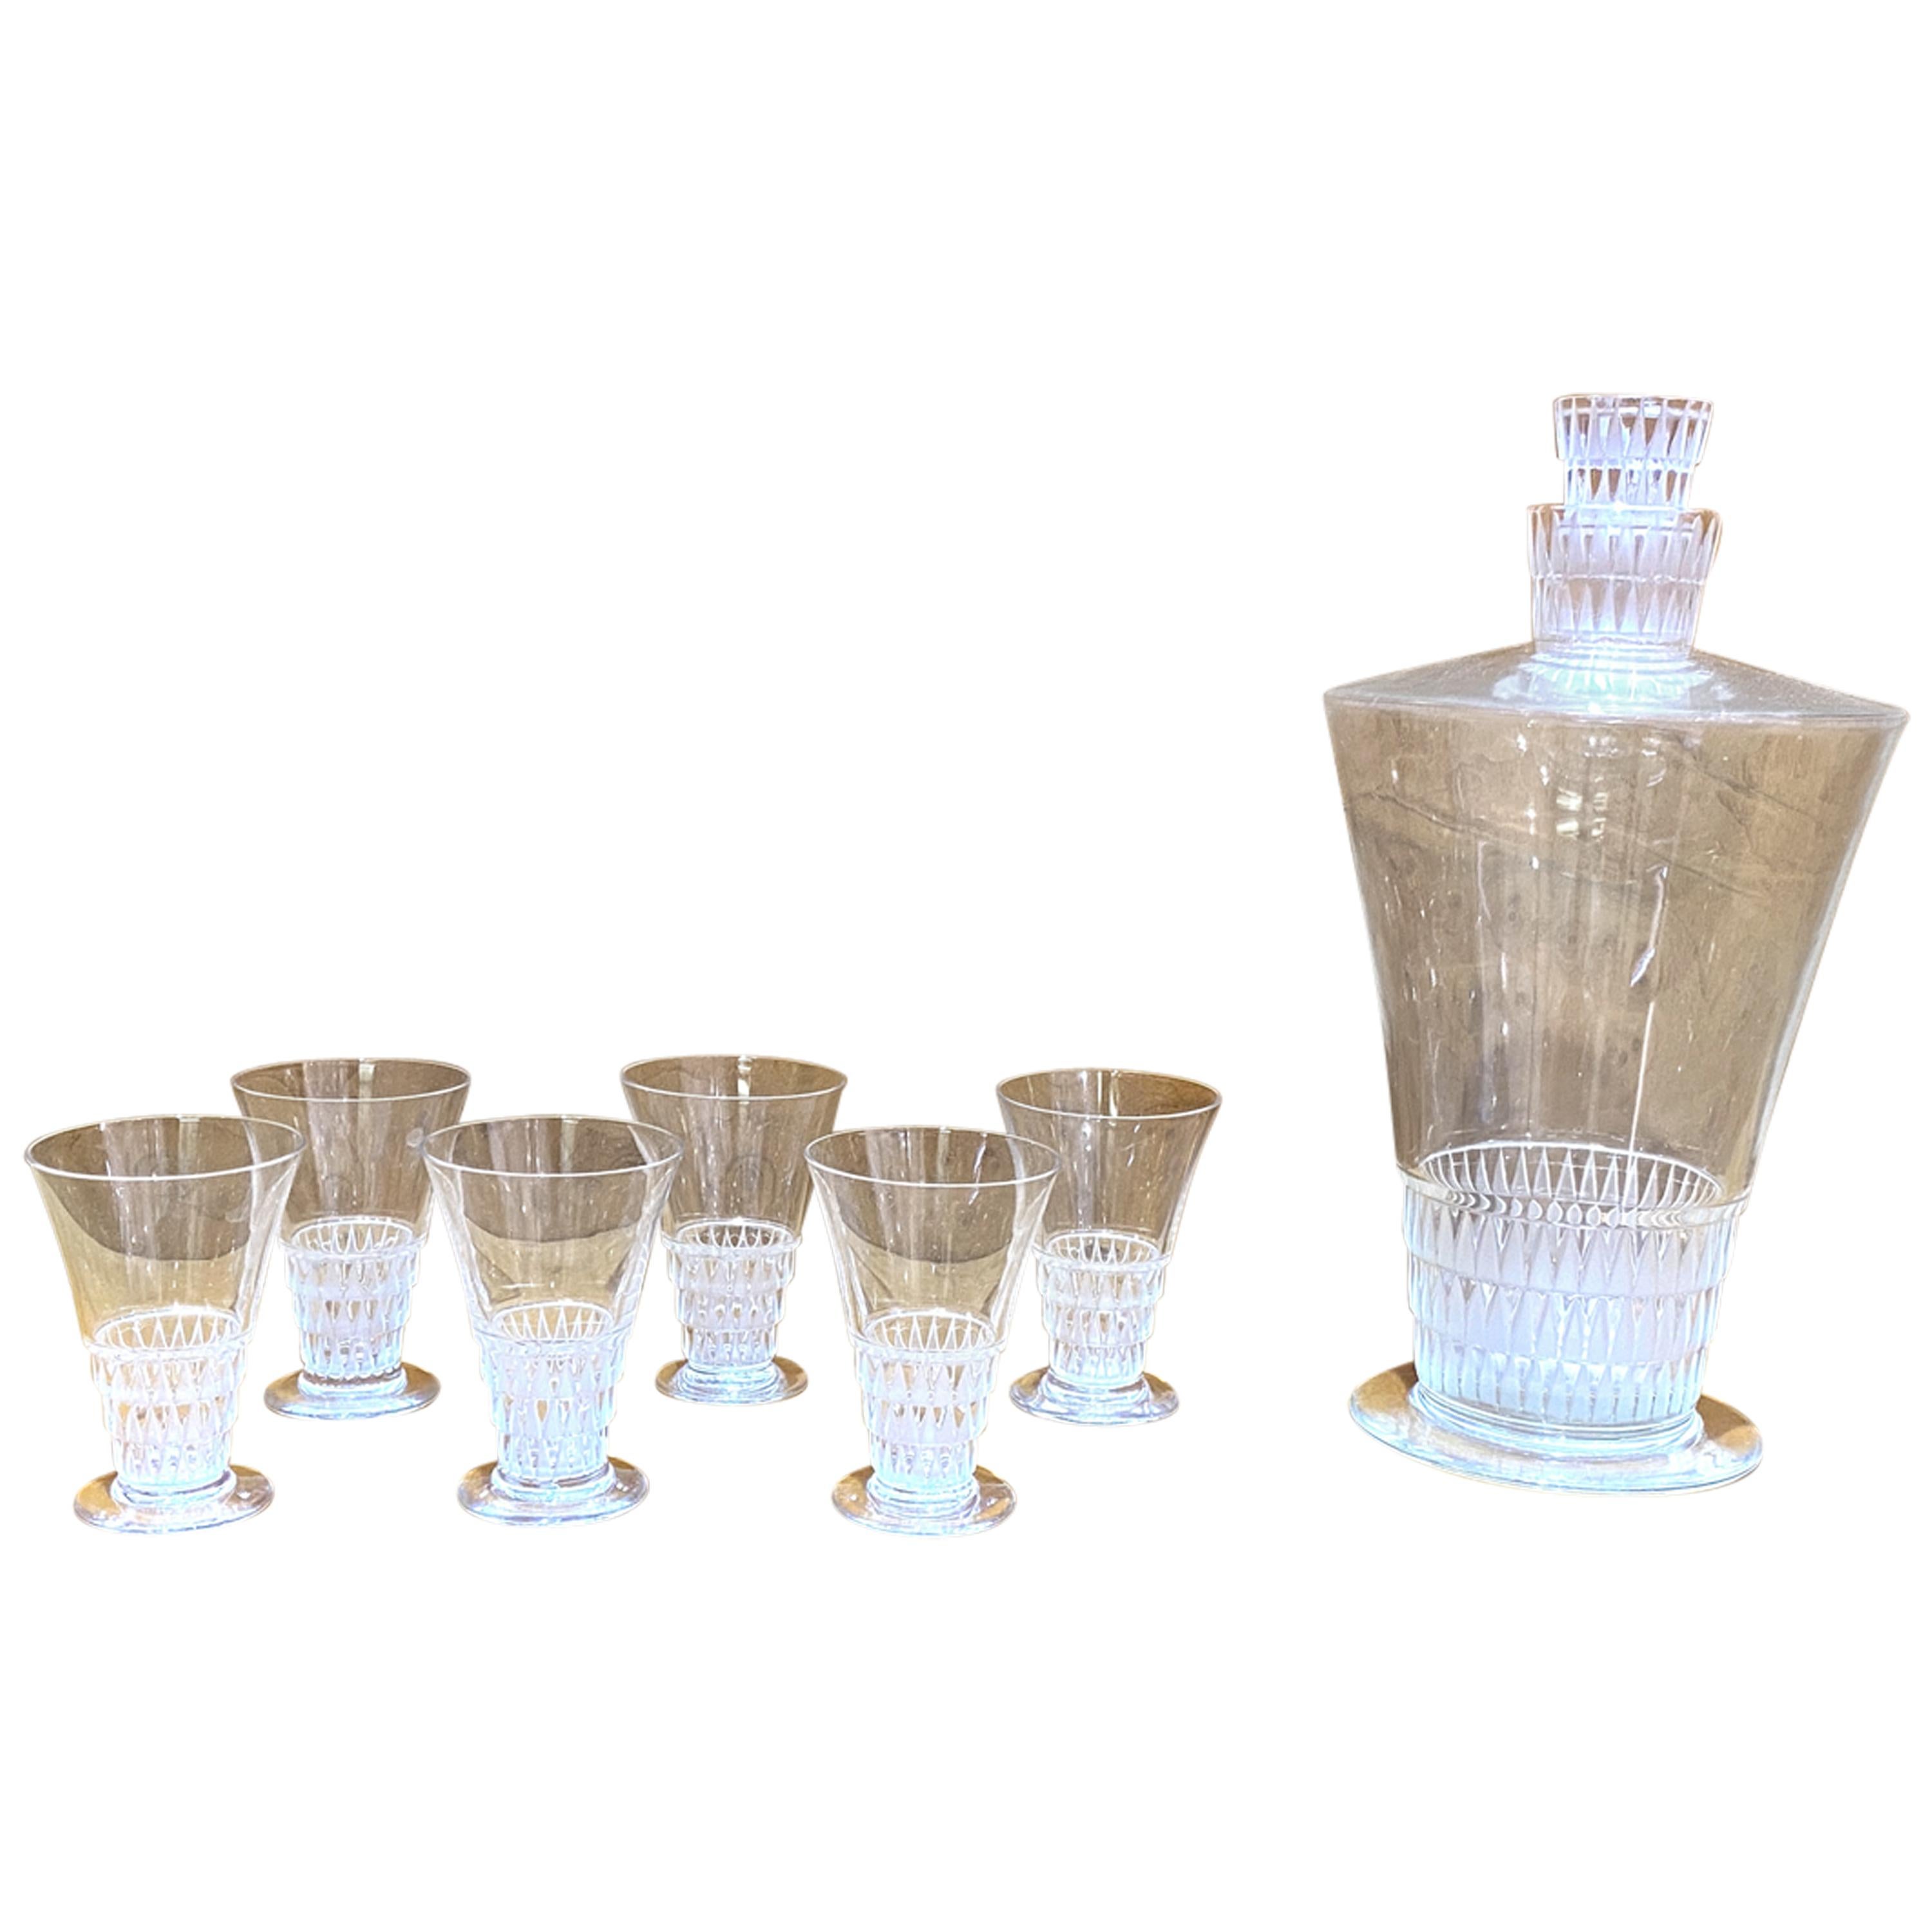 1930 René Lalique Original Bourgueil Liquor Set of 7 Pieces 6 Verres 1 Carafe